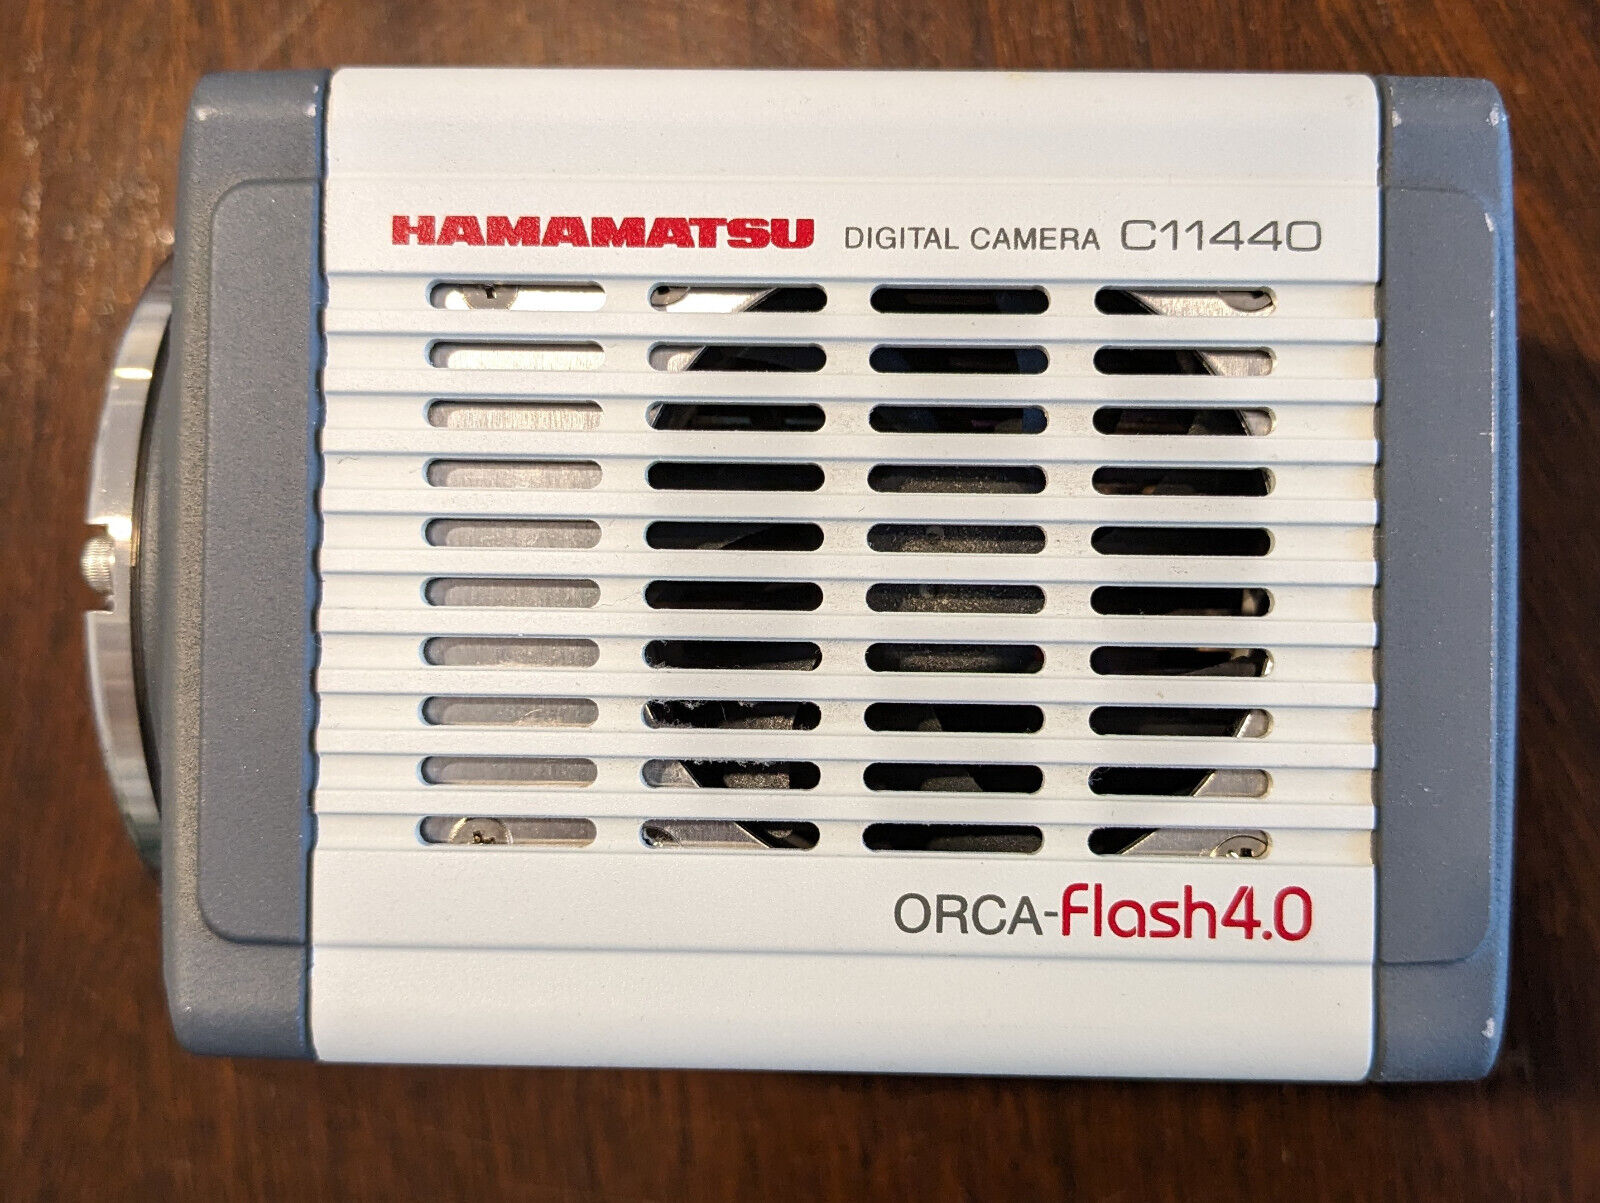 Hamamatsu C11440-22CU Industrial Digital Camera Orca-Flash 4.0 Tested EUC